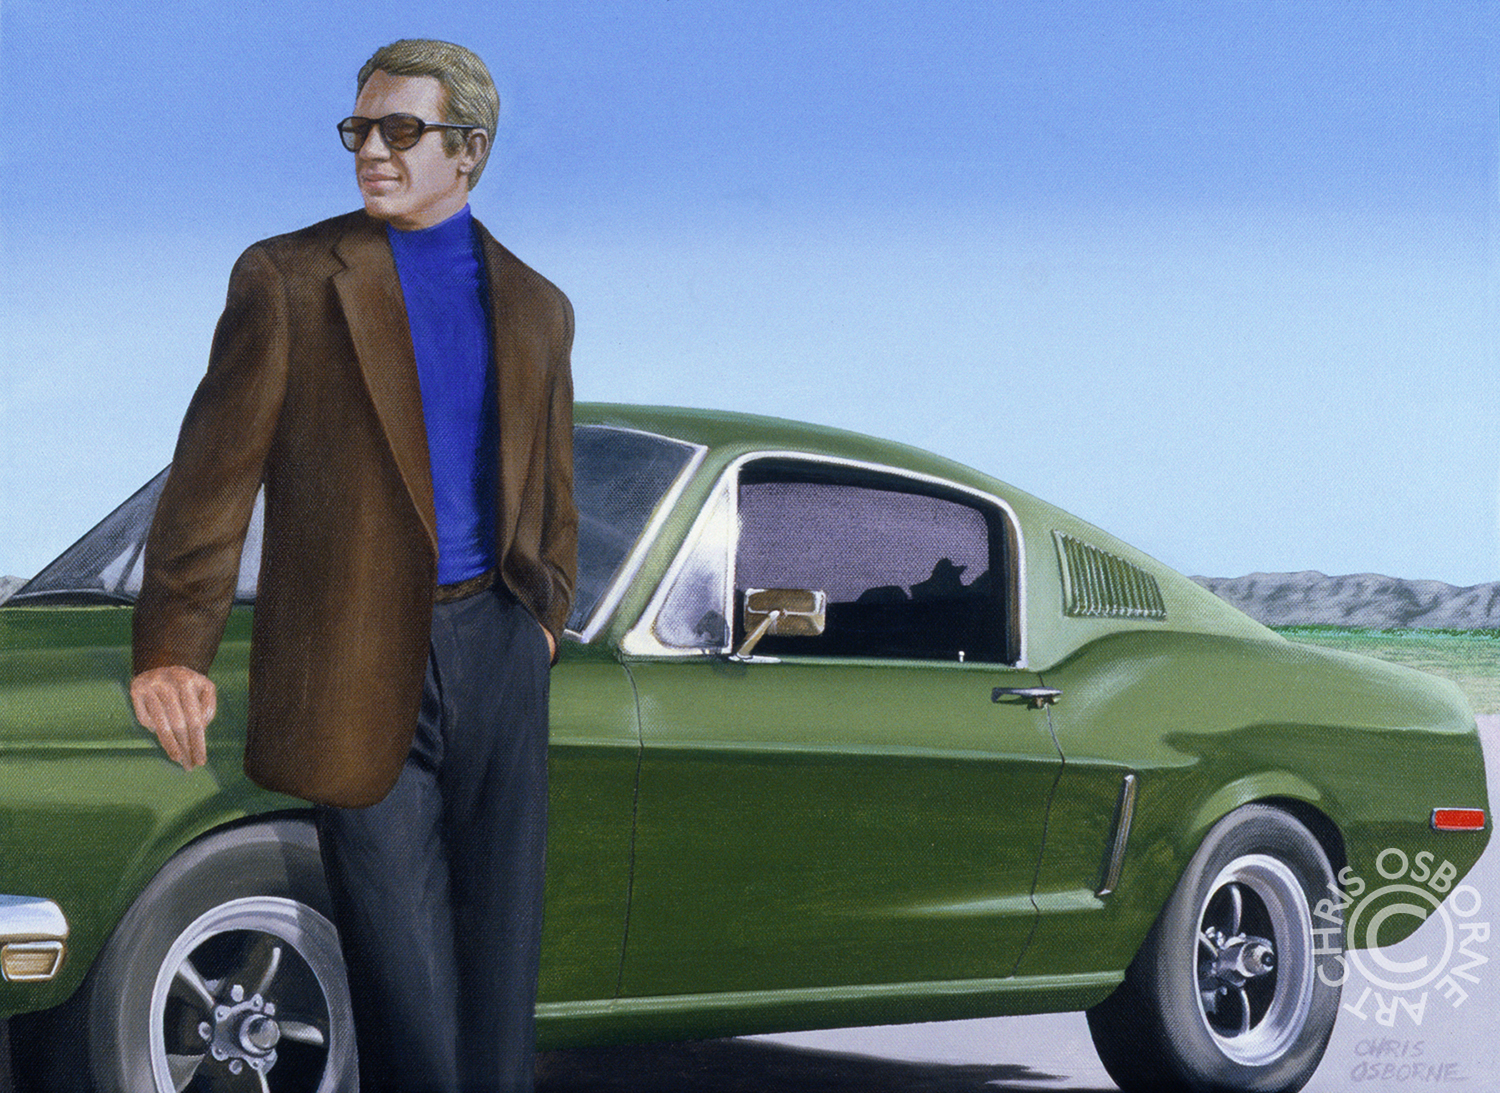 Steve McQueen | "Bullitt" Mustang